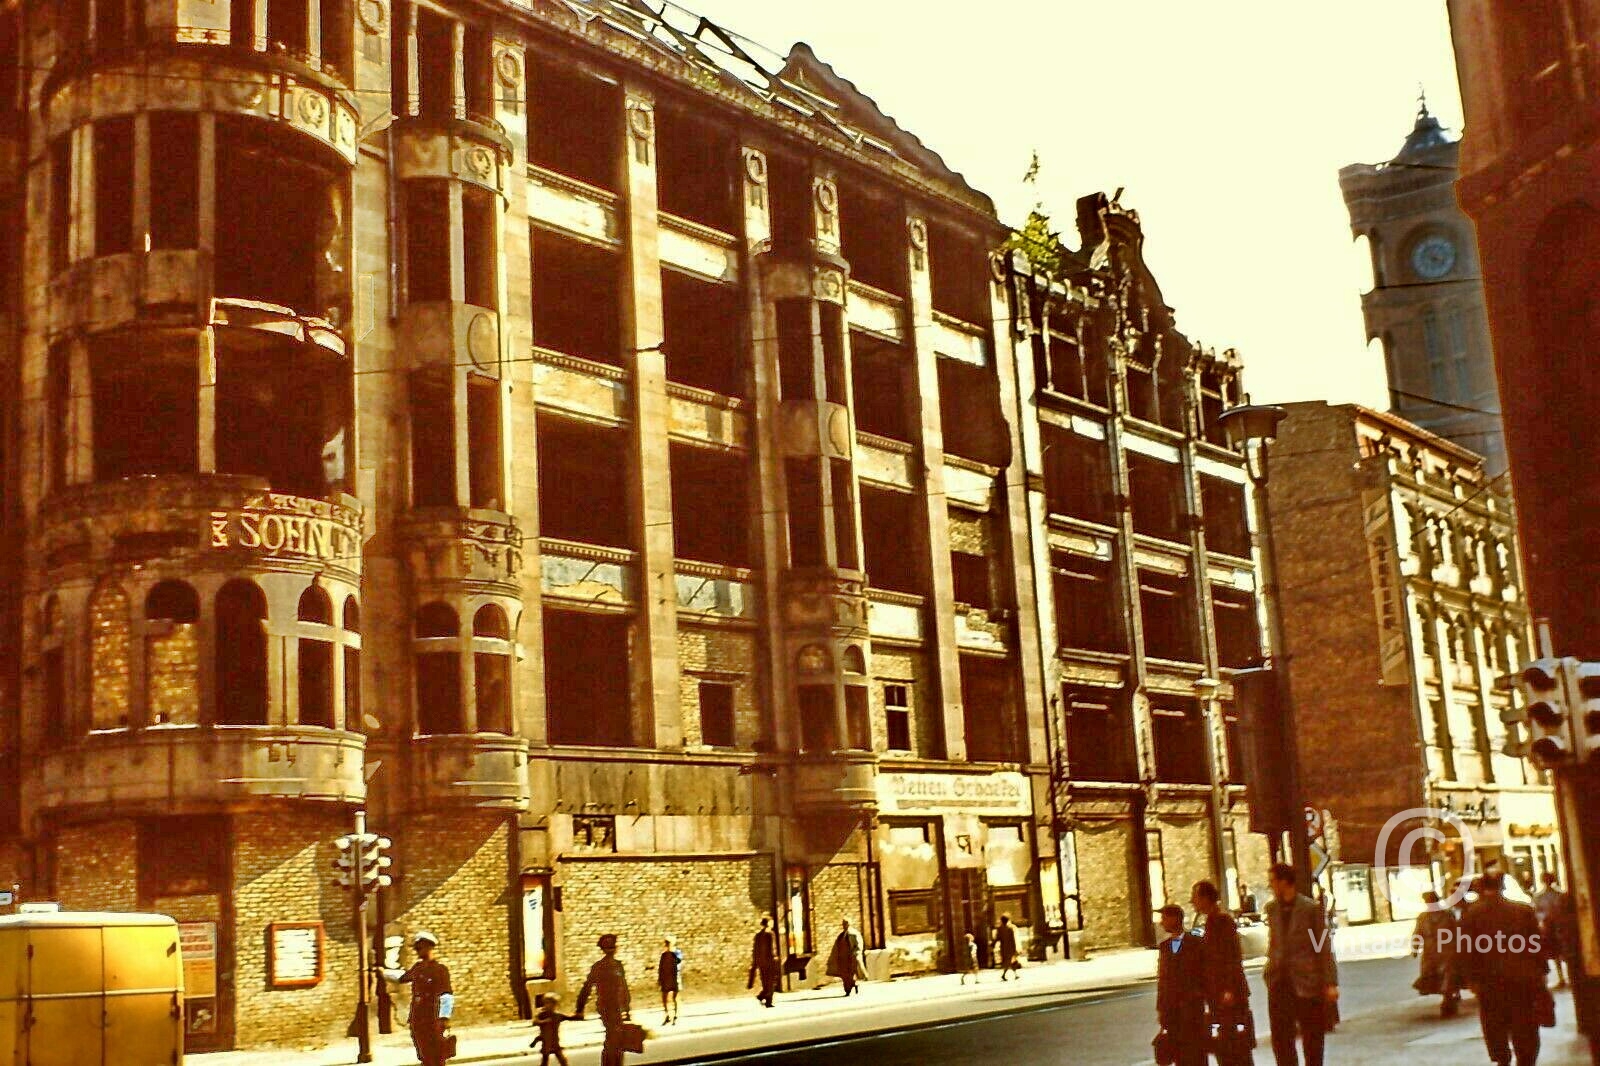 1958 German City Bombing Ruins, Busy Street